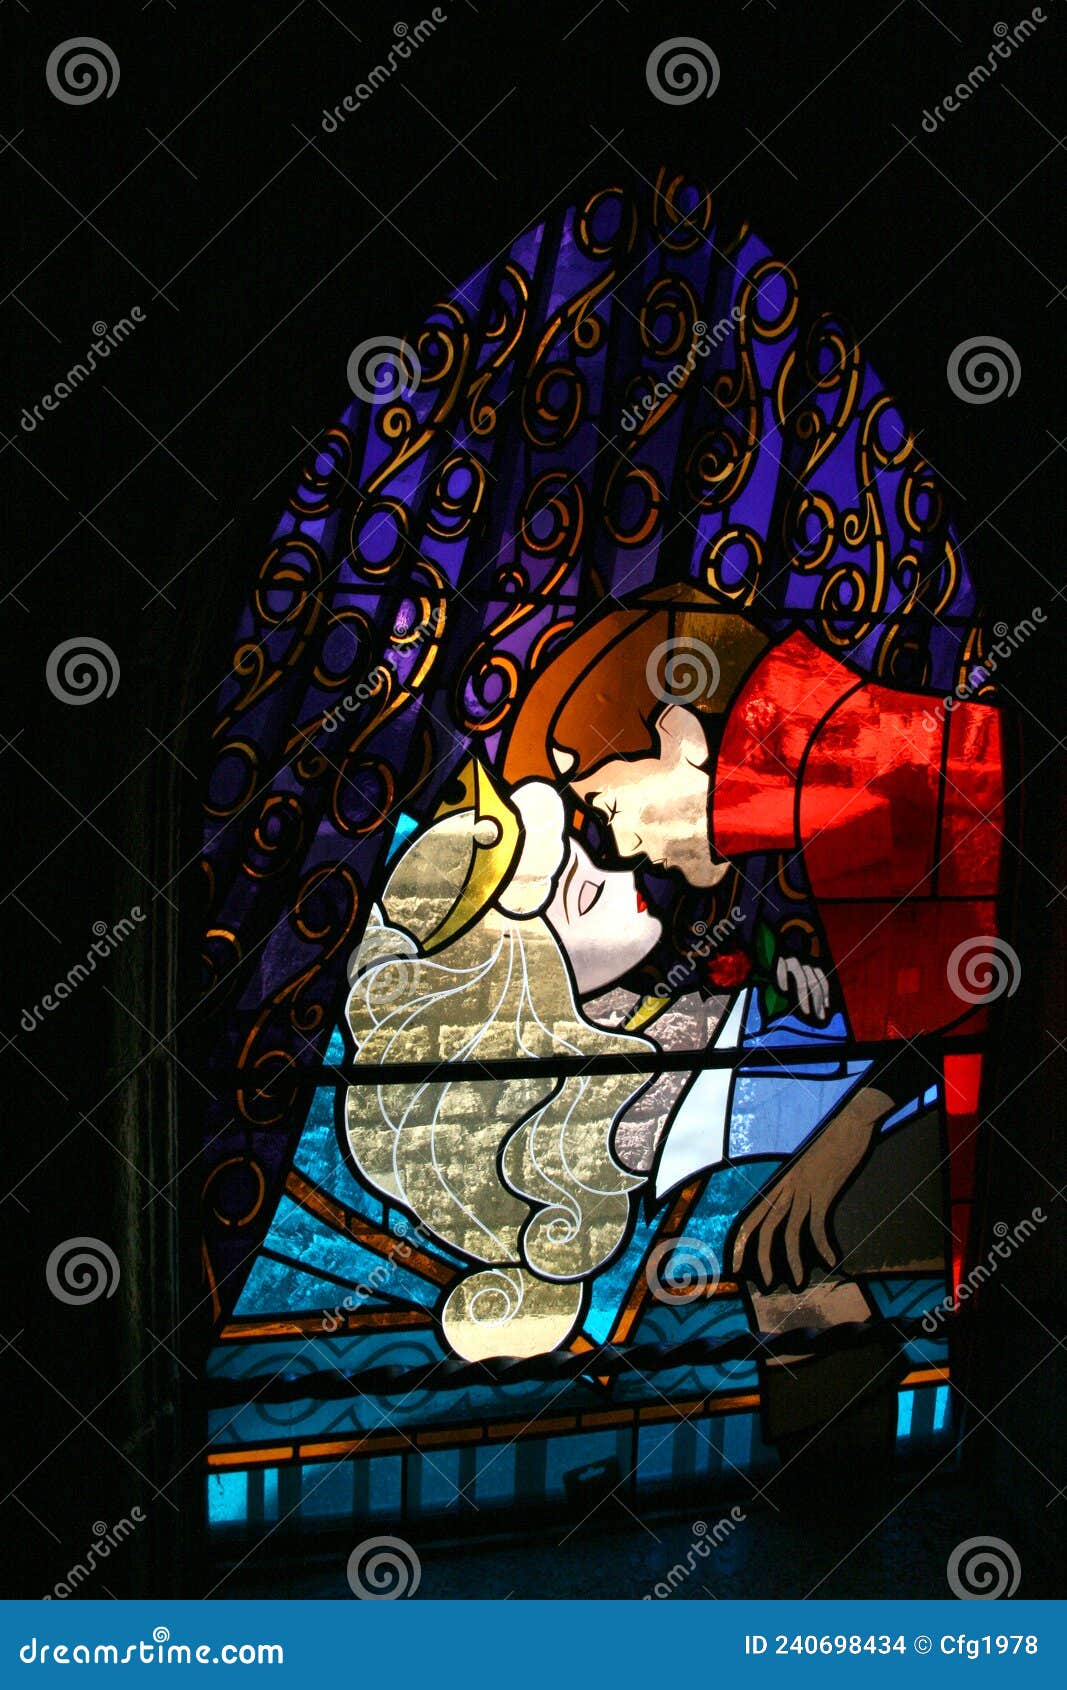 sleeping beauty stained glass window